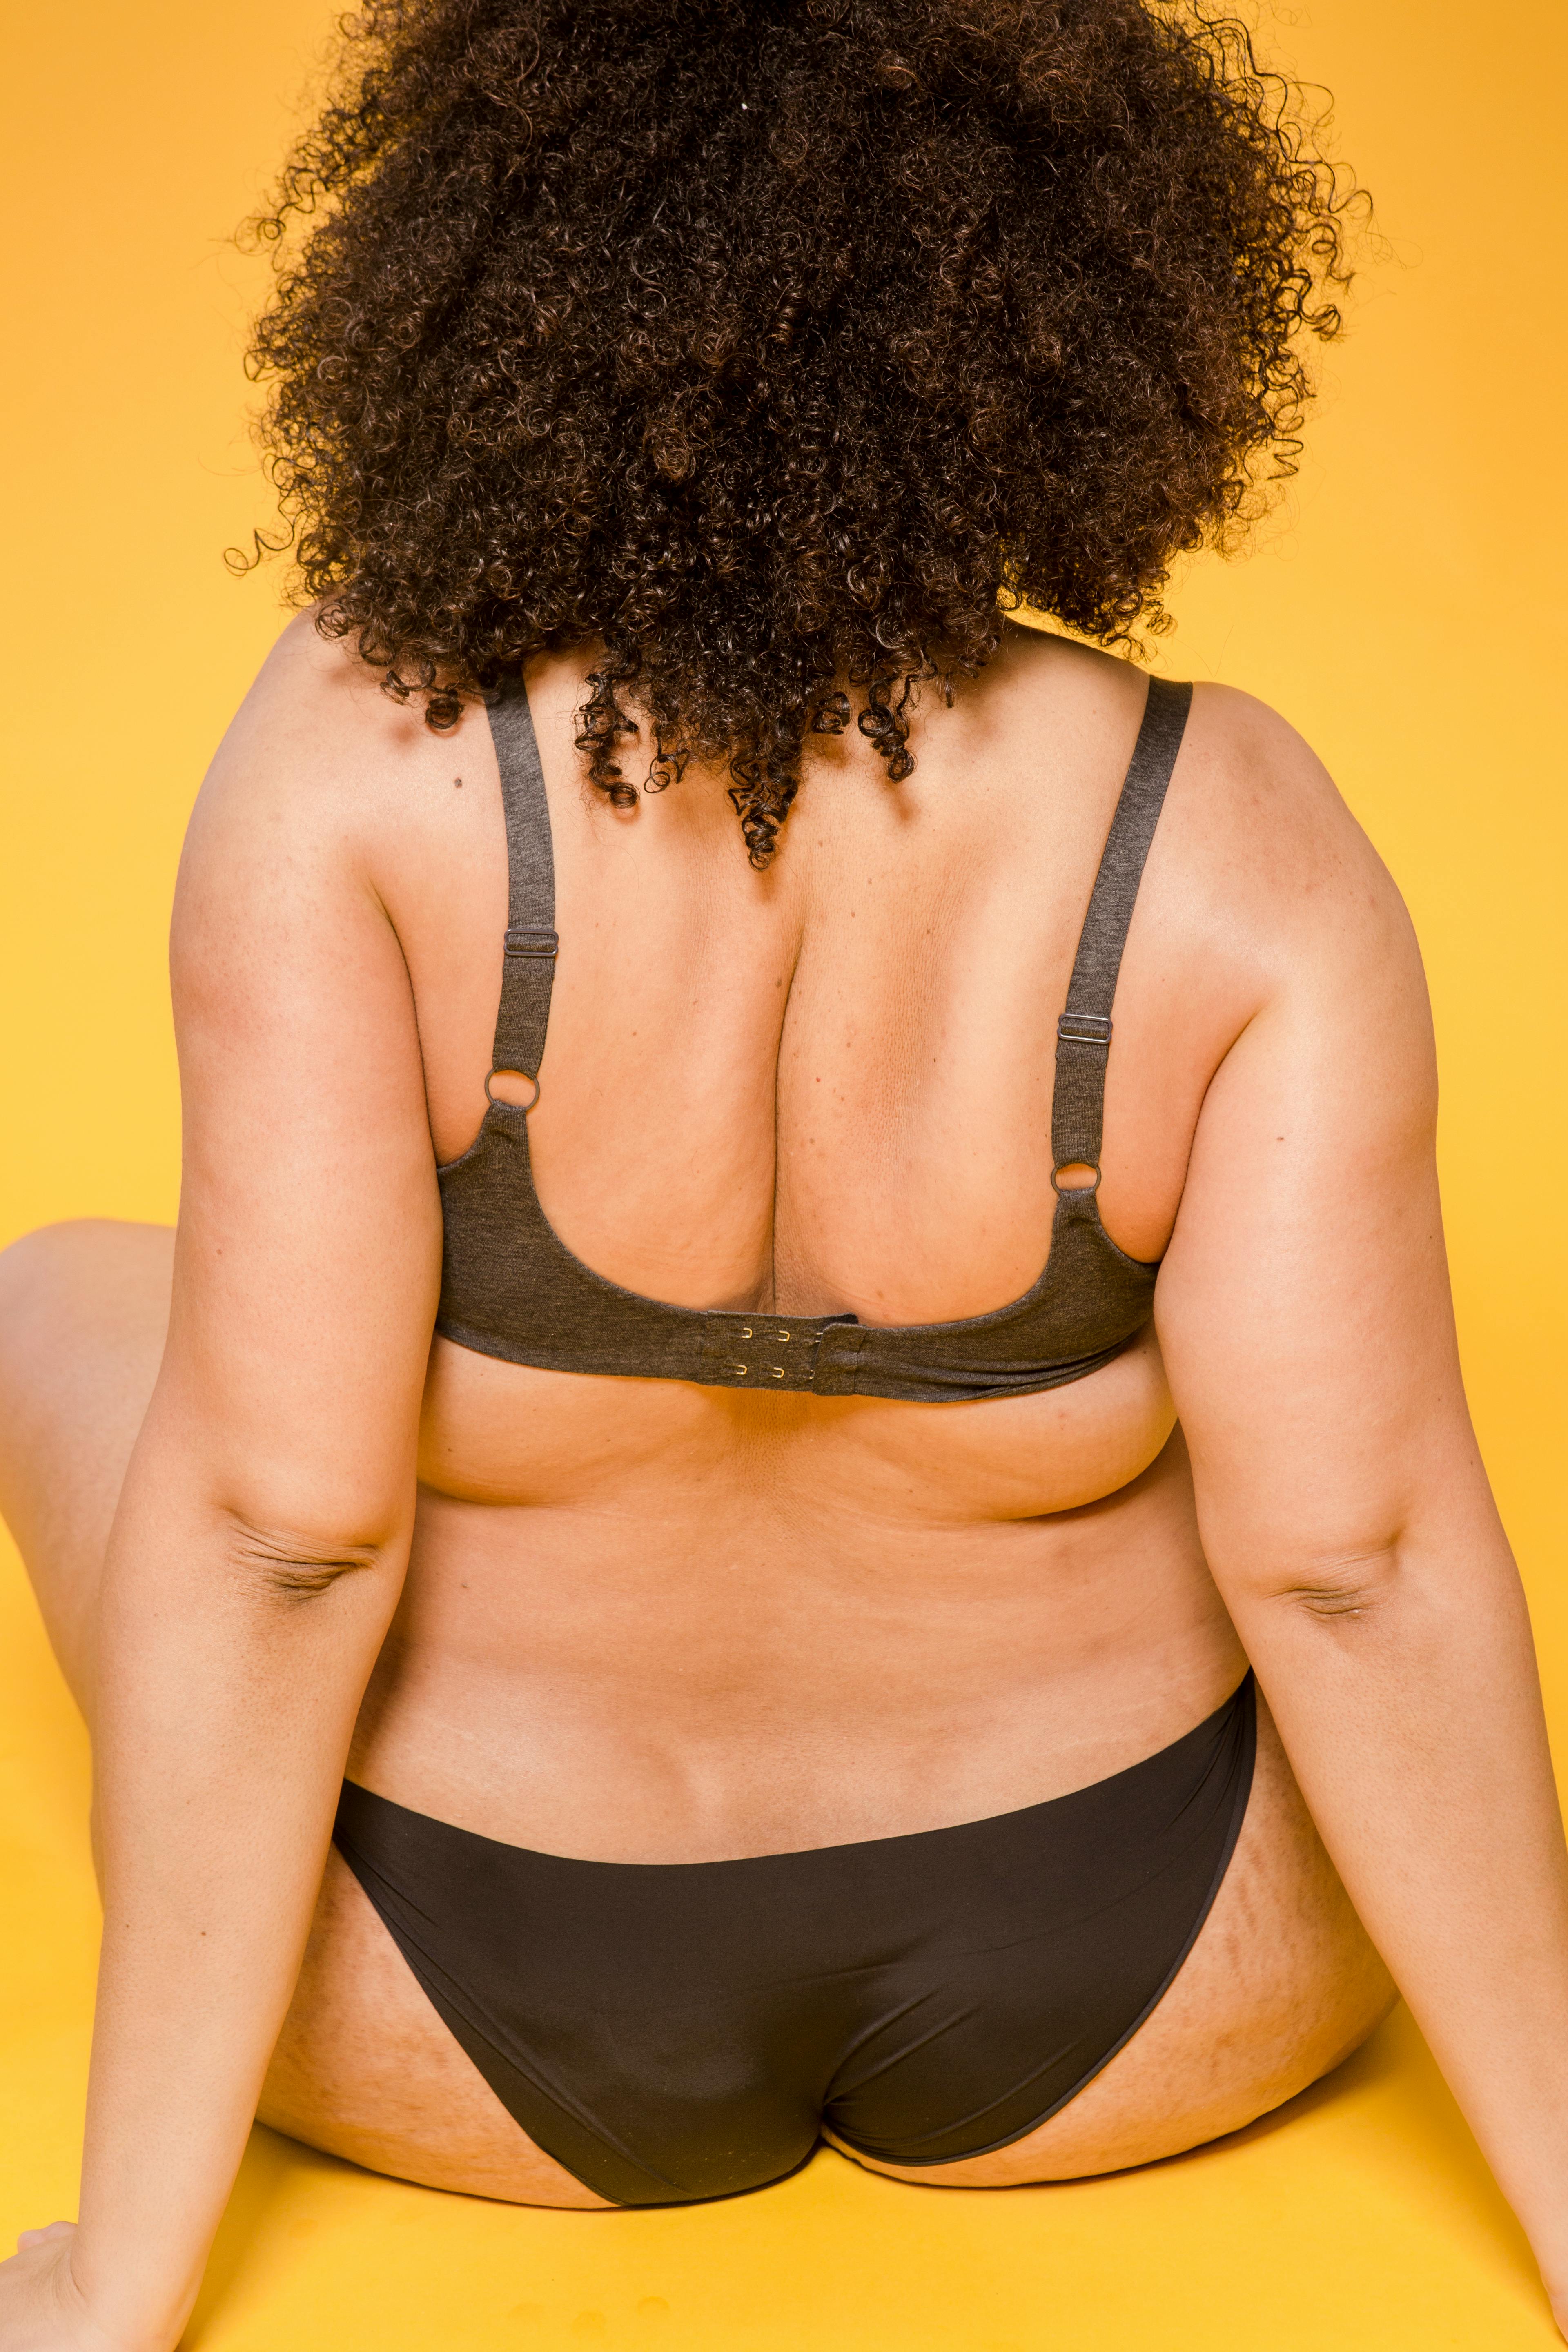 Overweight black woman in underwear · Free Stock Photo